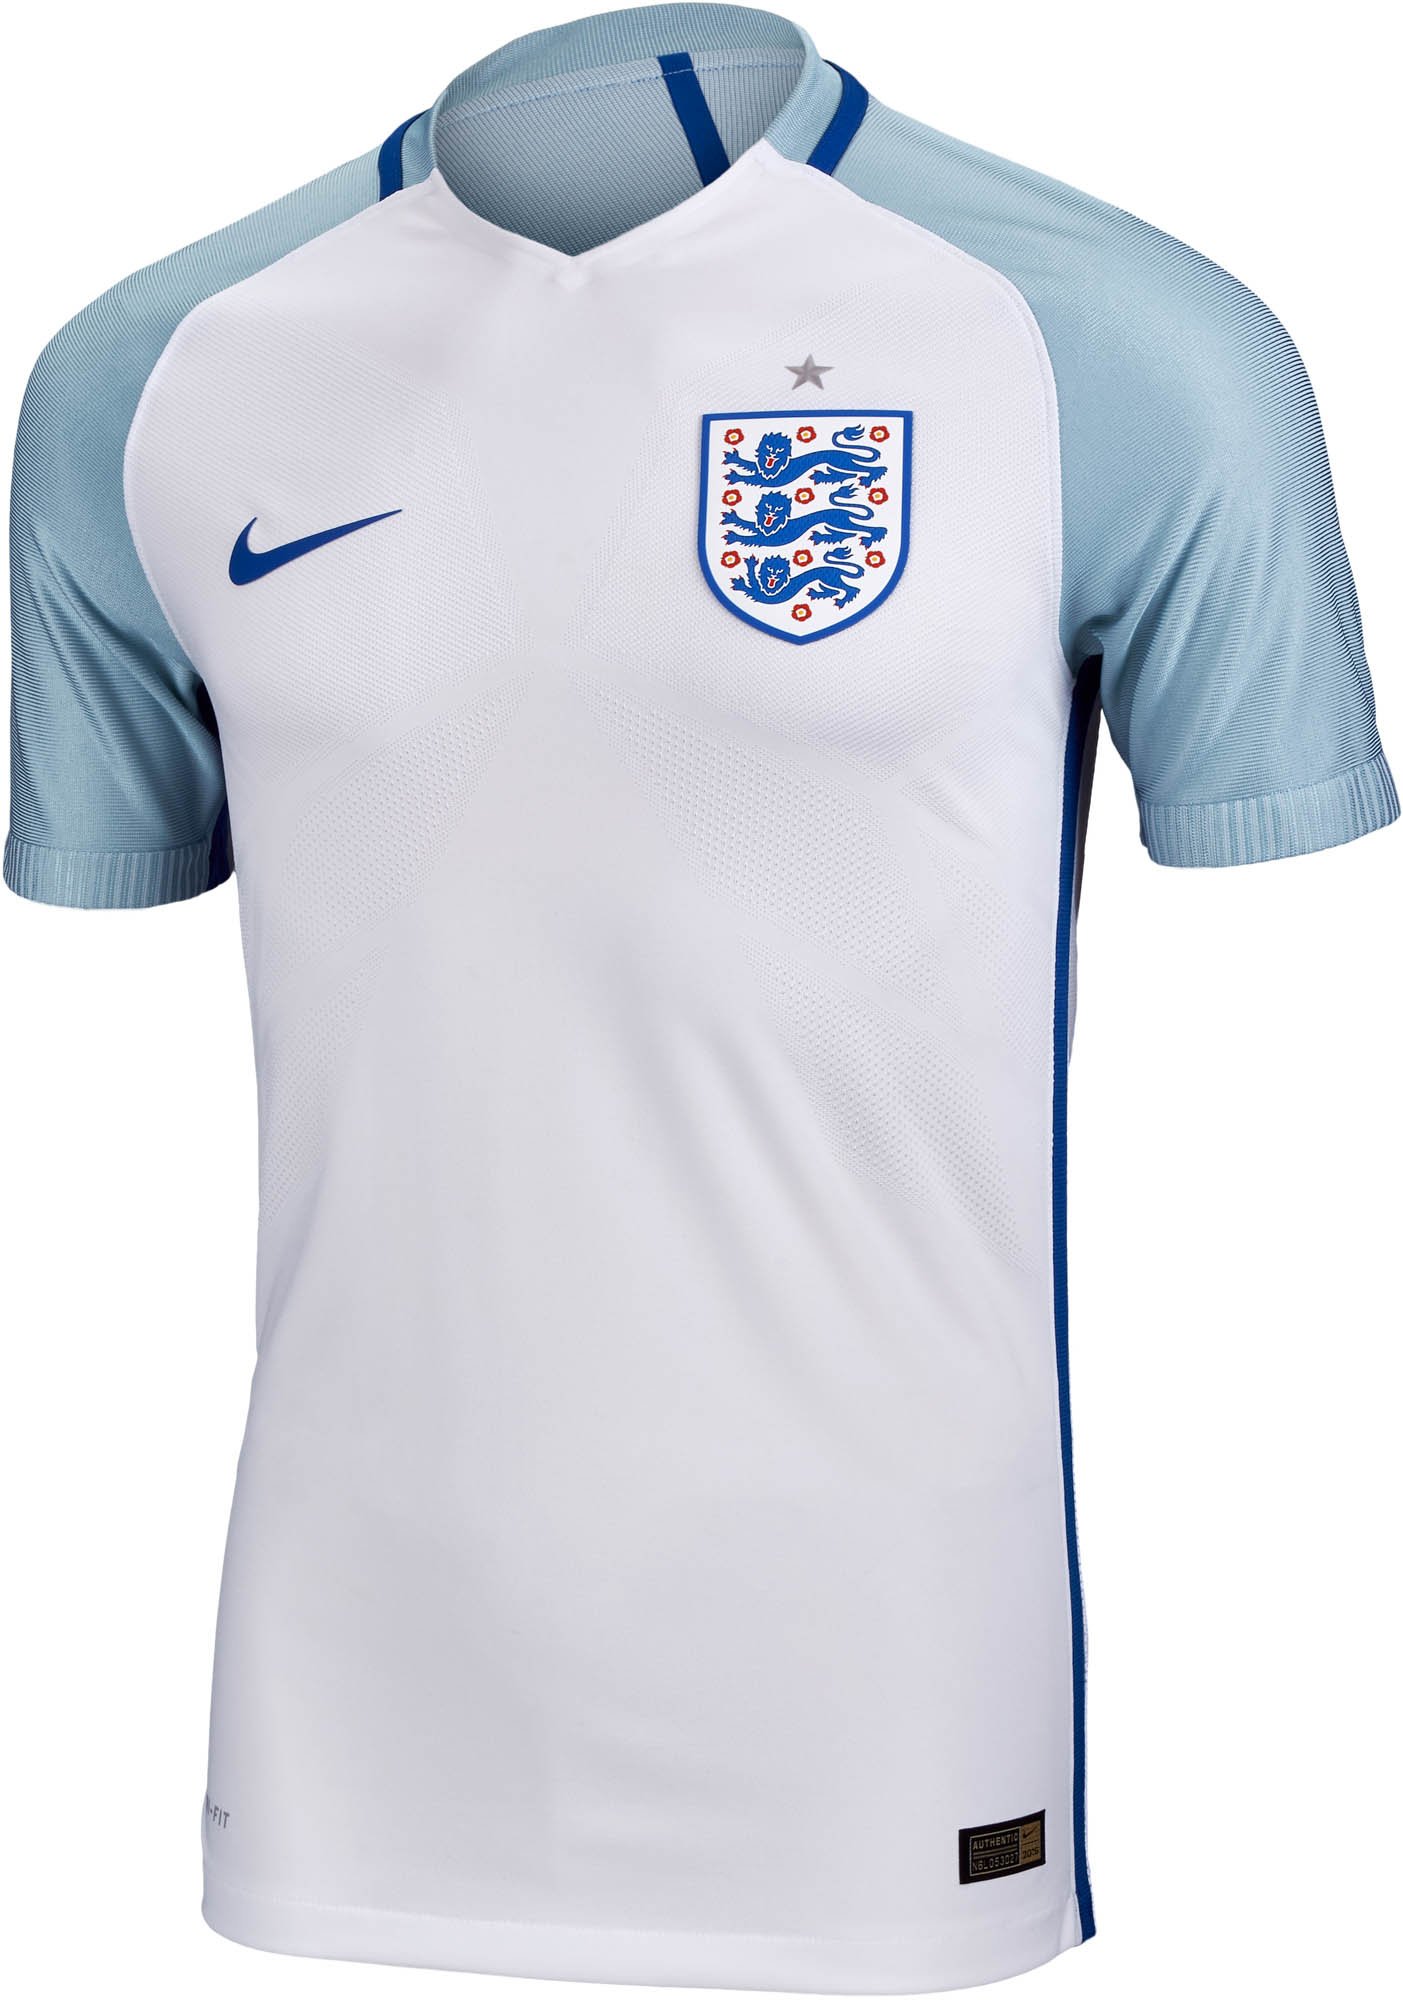 Nike England Home Match Jersey - 2016 